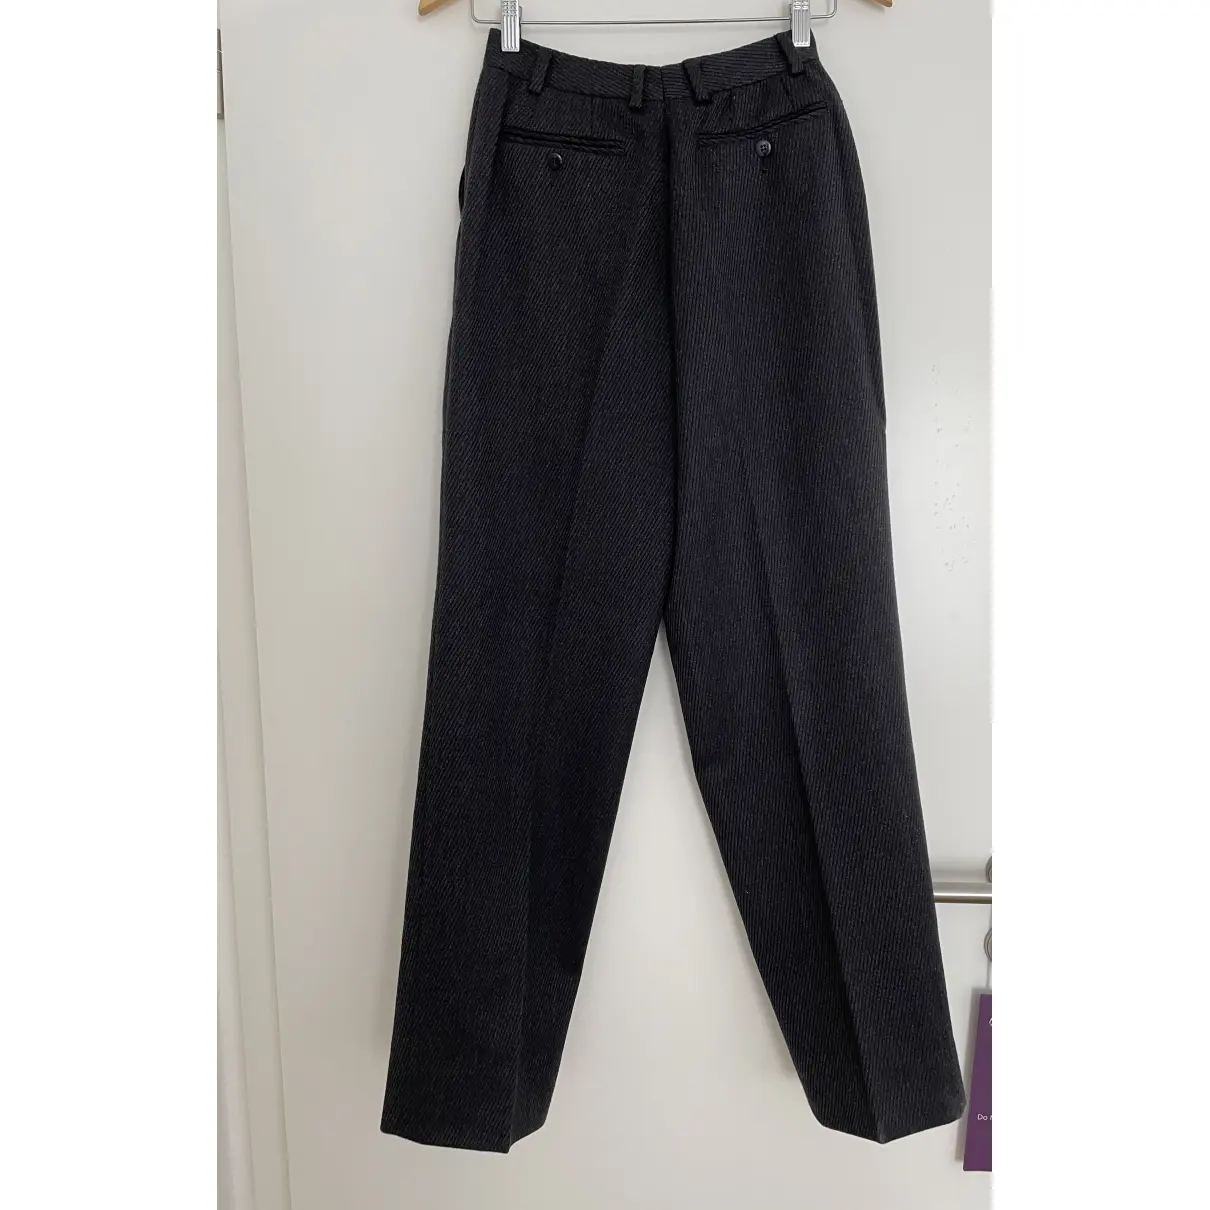 Buy Giorgio Armani Wool trousers online - Vintage